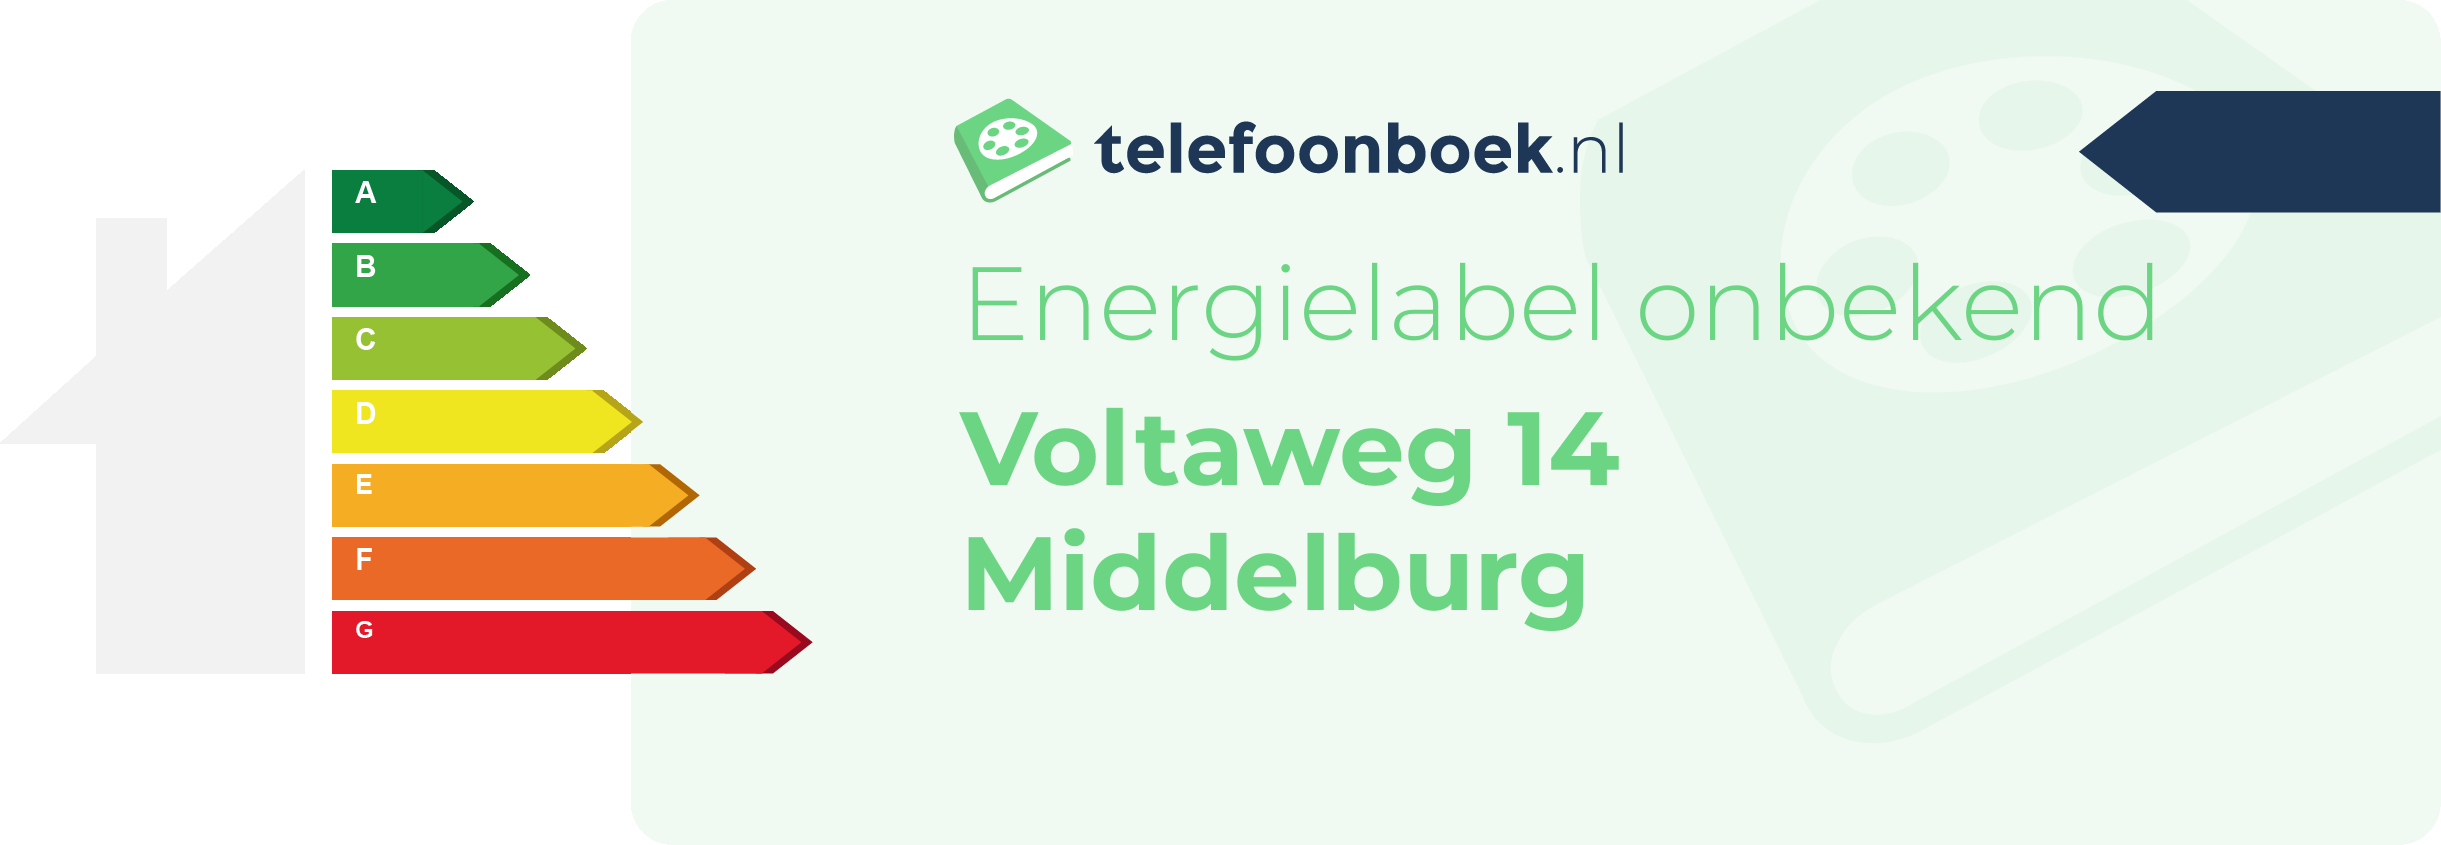 Energielabel Voltaweg 14 Middelburg